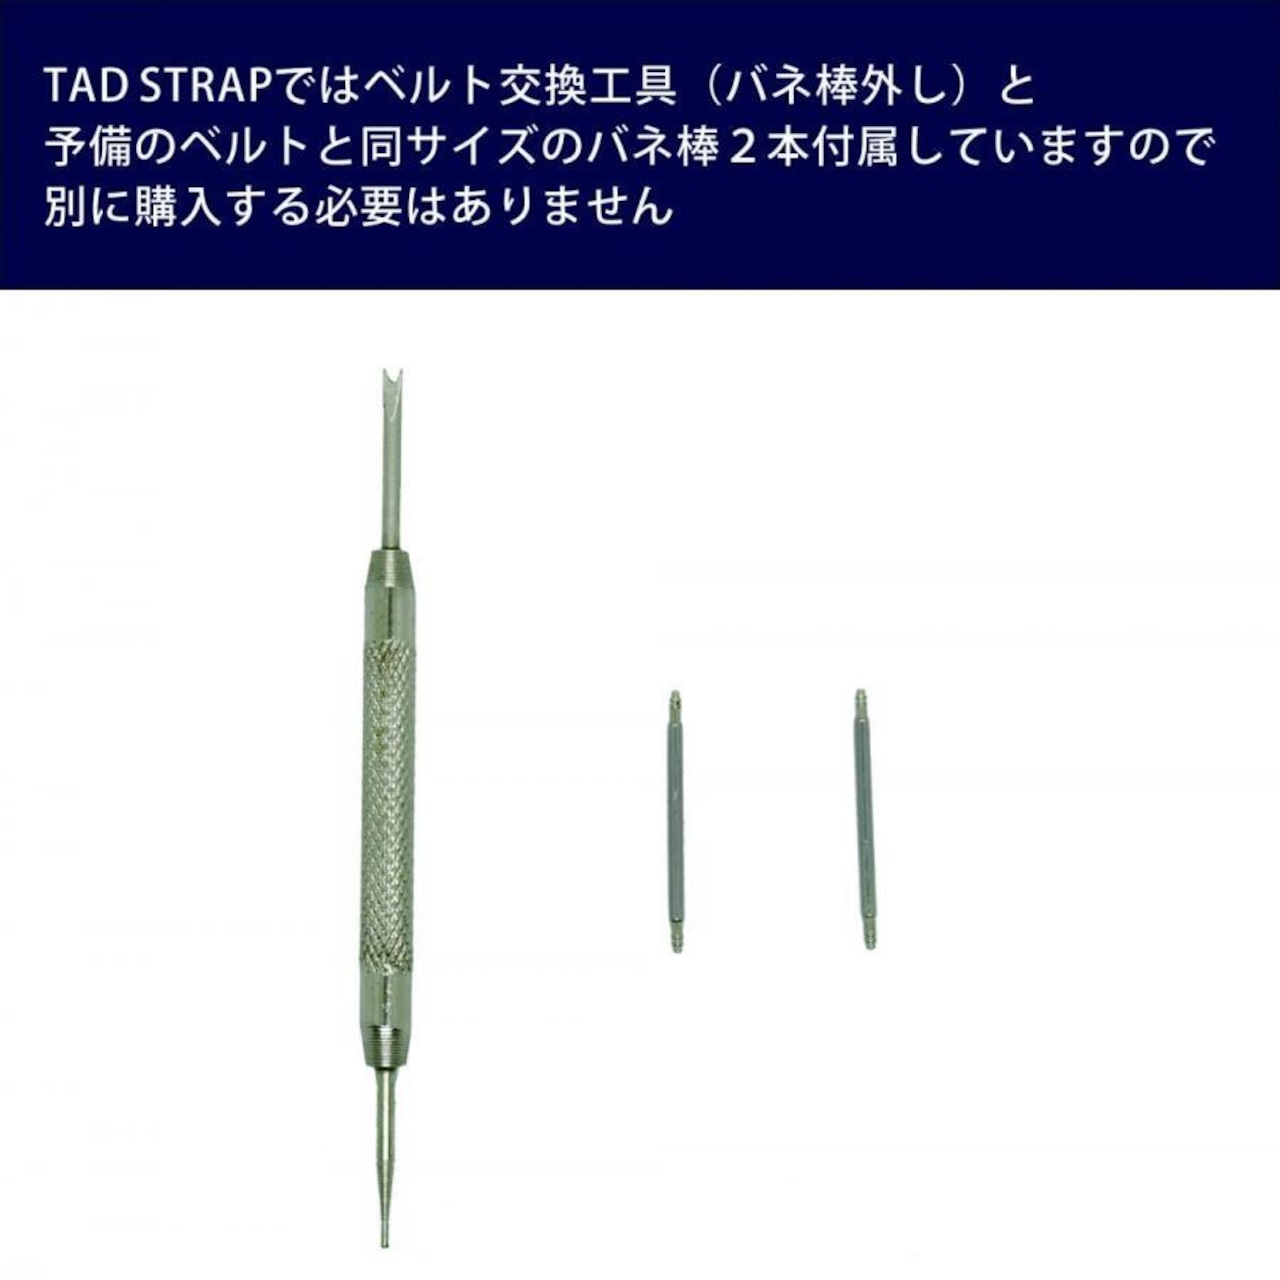 TAD STRAP nagara2 NATOストラップ  20mm 腕時計ベルト